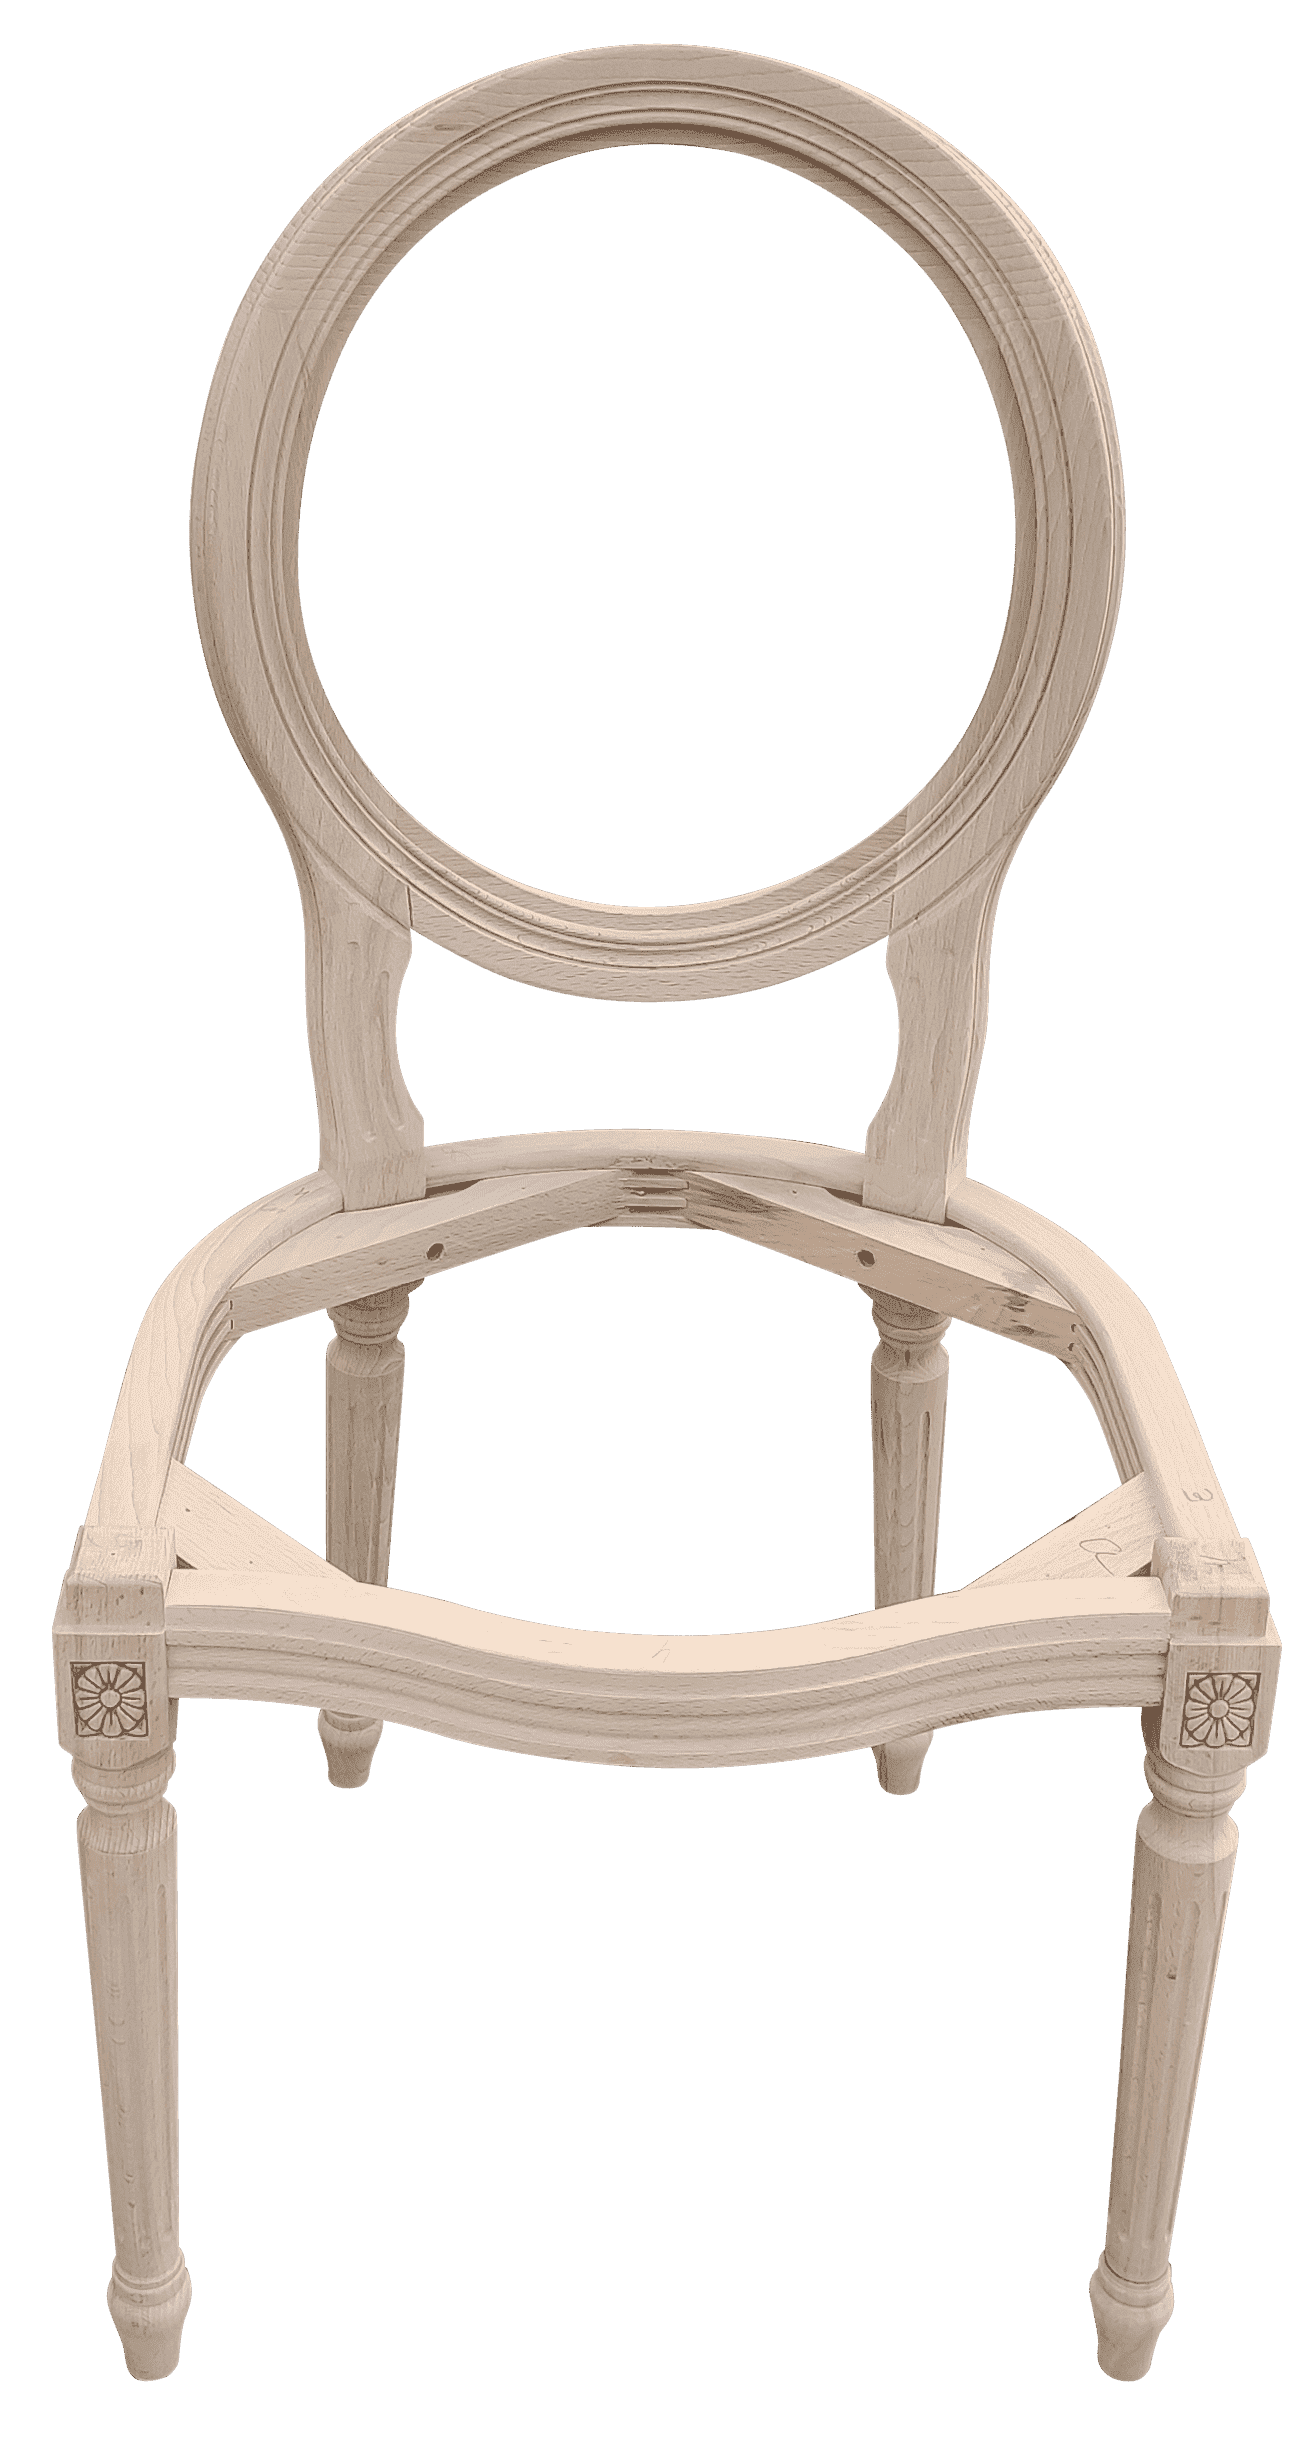 Каркасы стульев для обивки